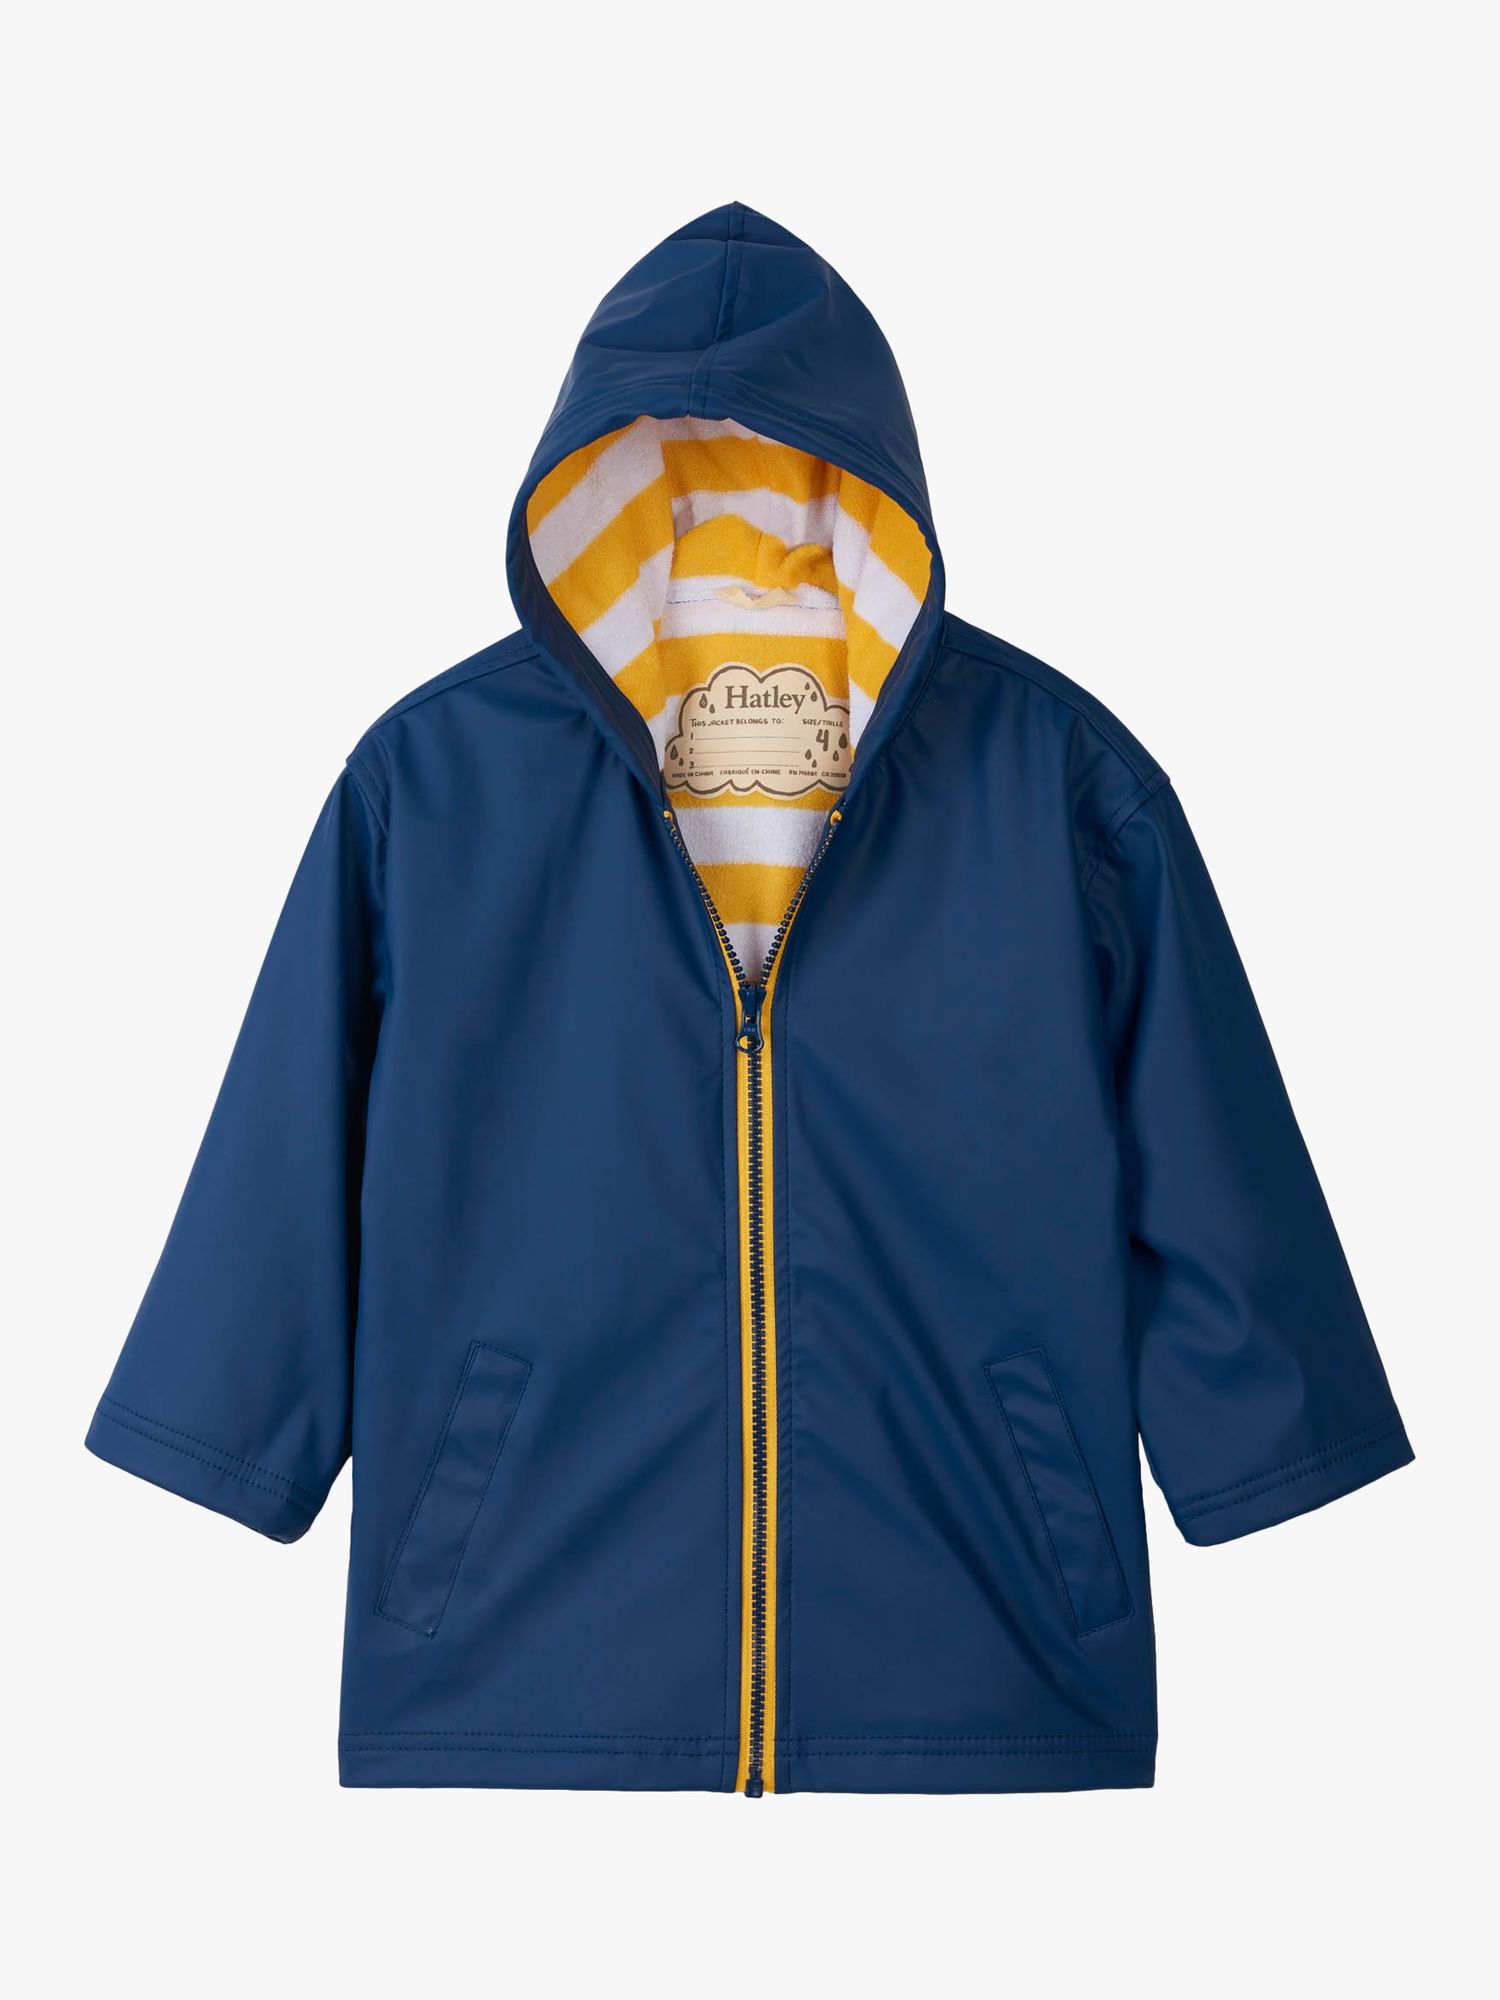 DressInn Boys Clothing Jackets Rainwear 32x5804 Rain Jacket Blue 4 Years Boy 